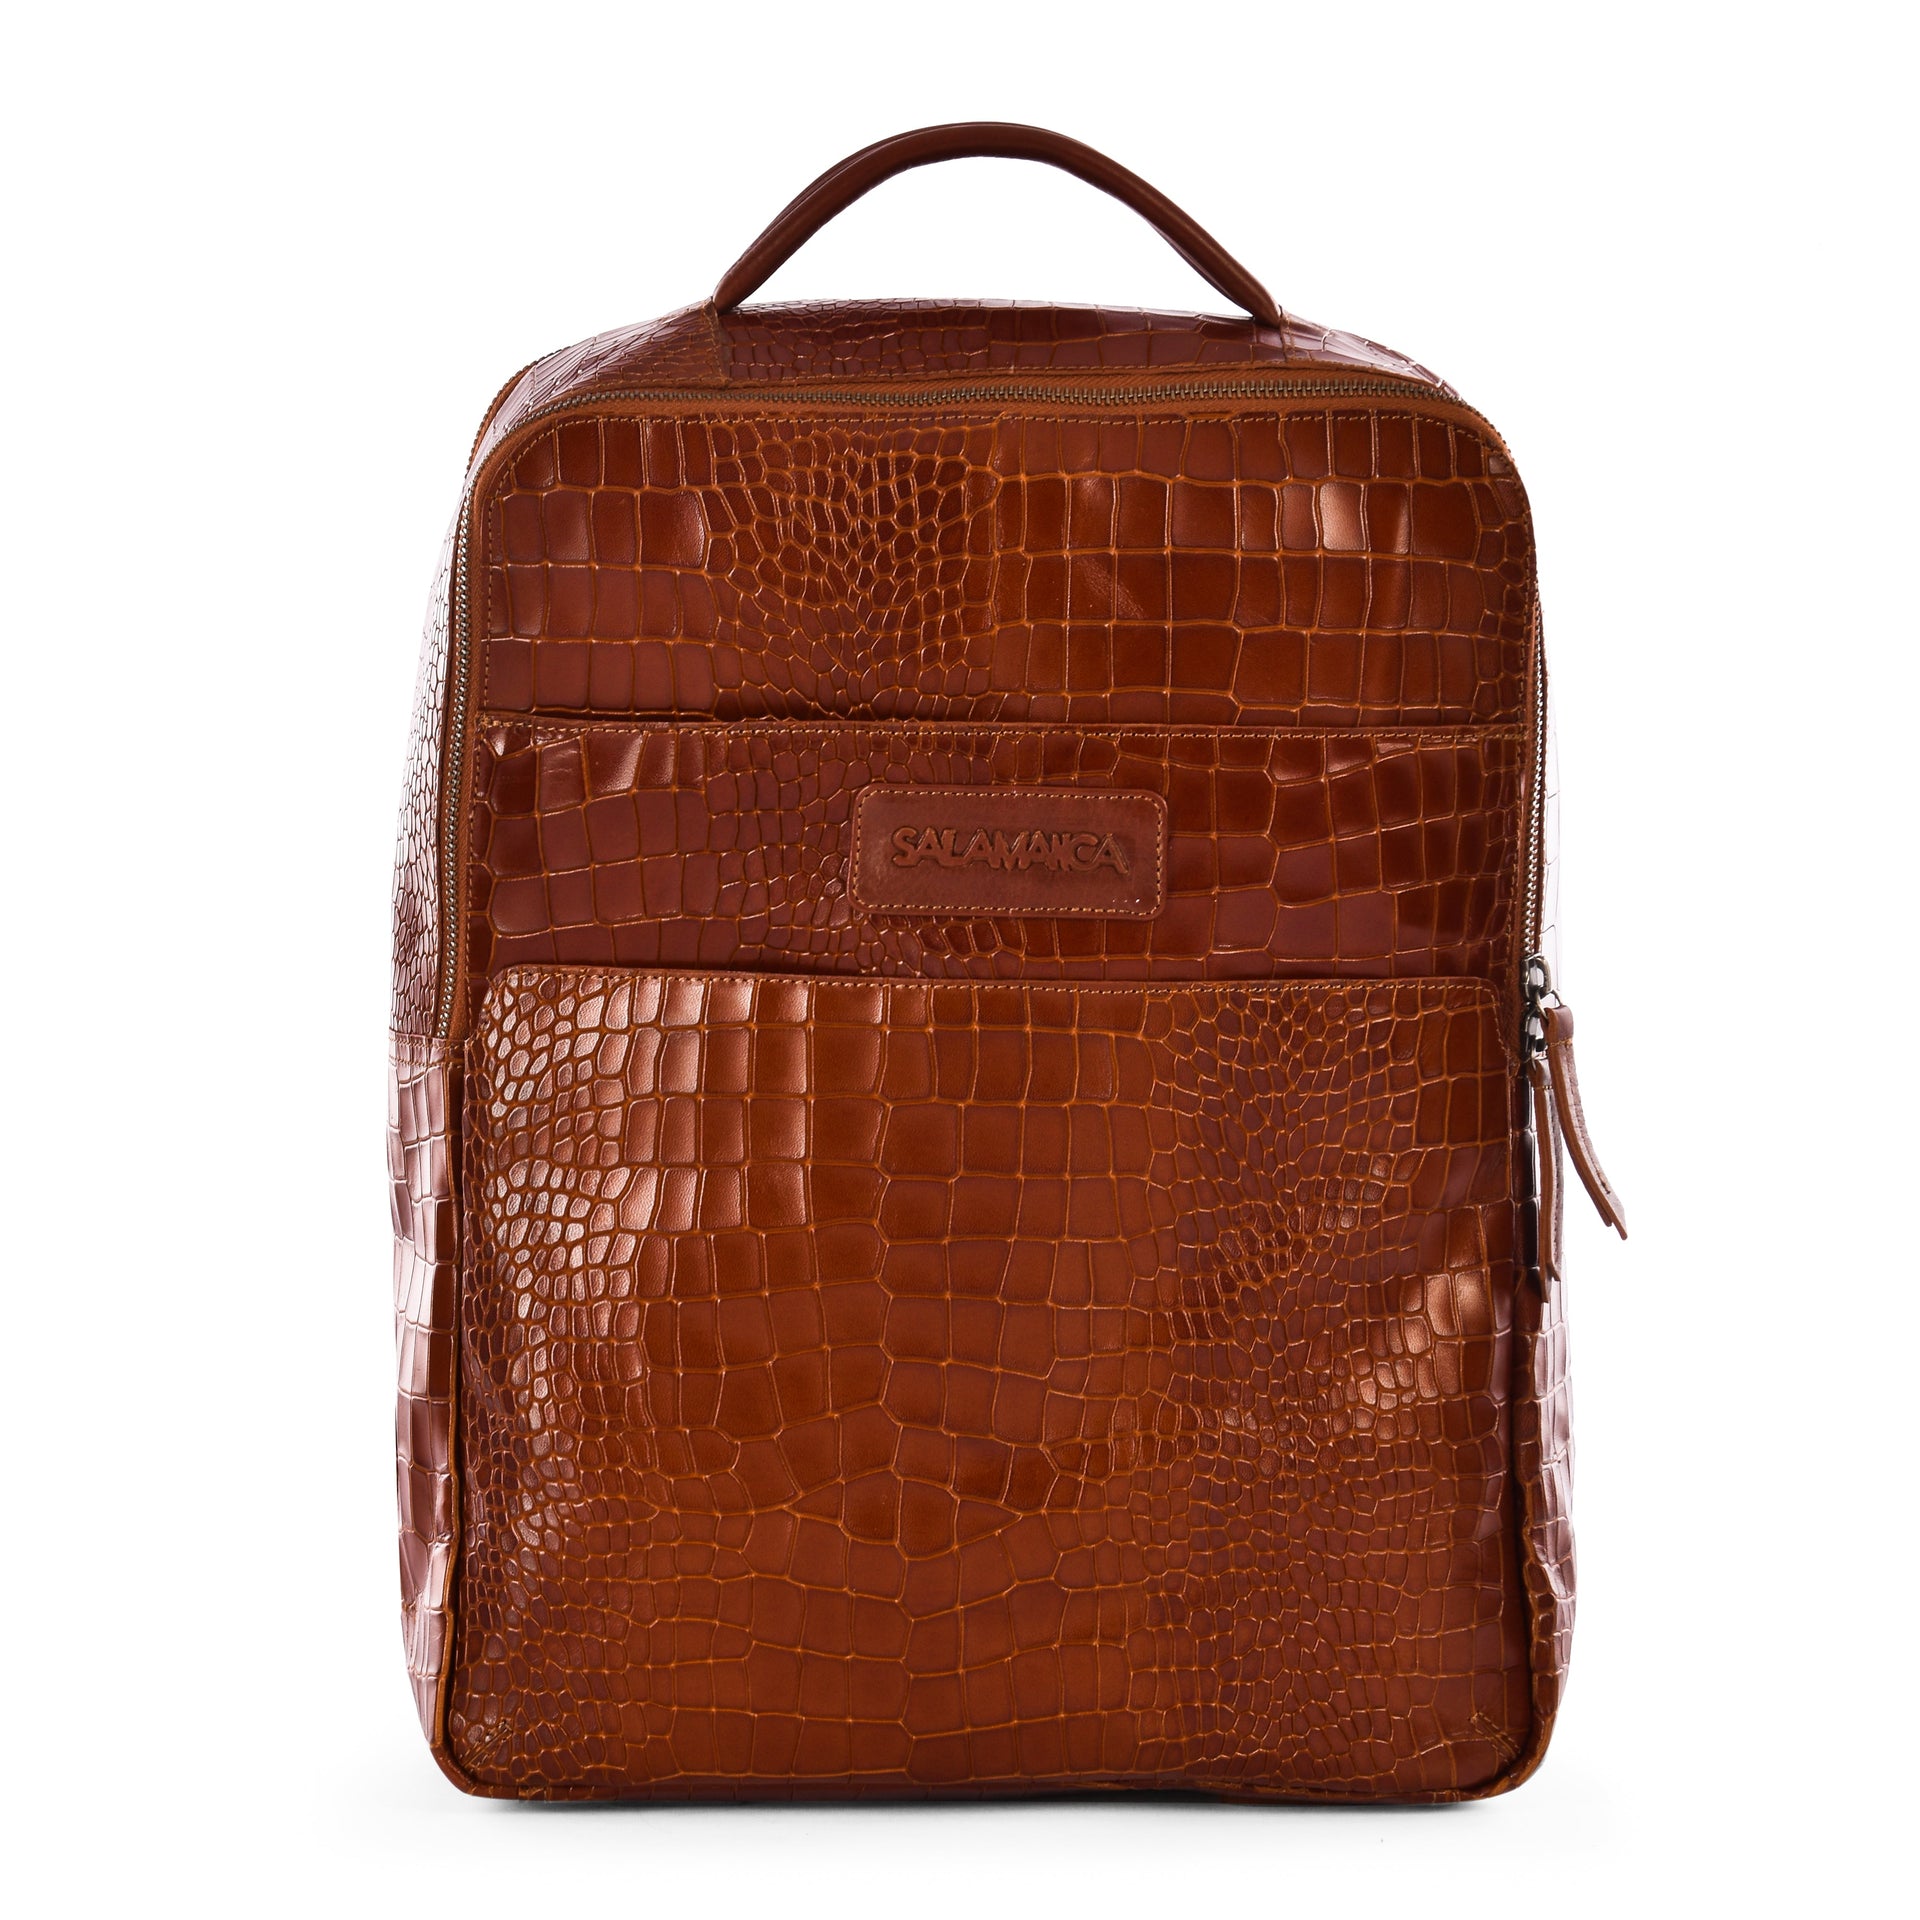 Berto Backpack - Salient Tan - Backpack